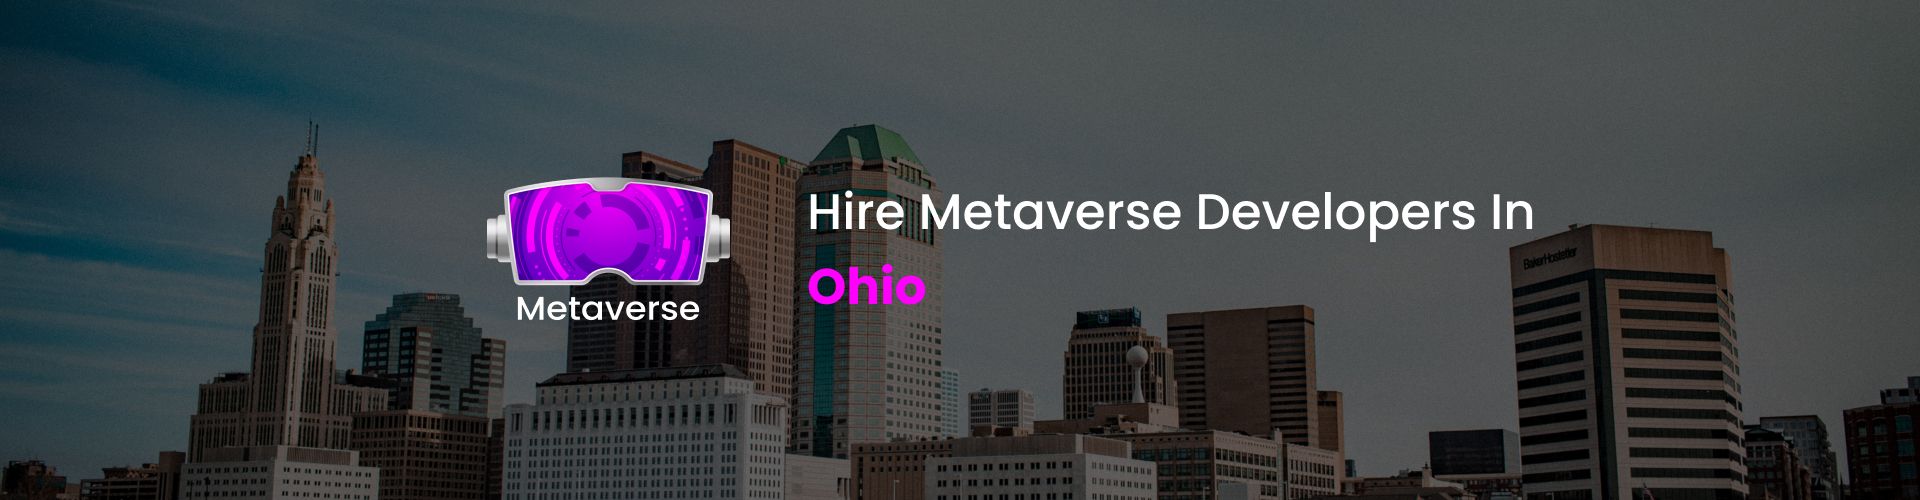 hire metaverse developers in ohio